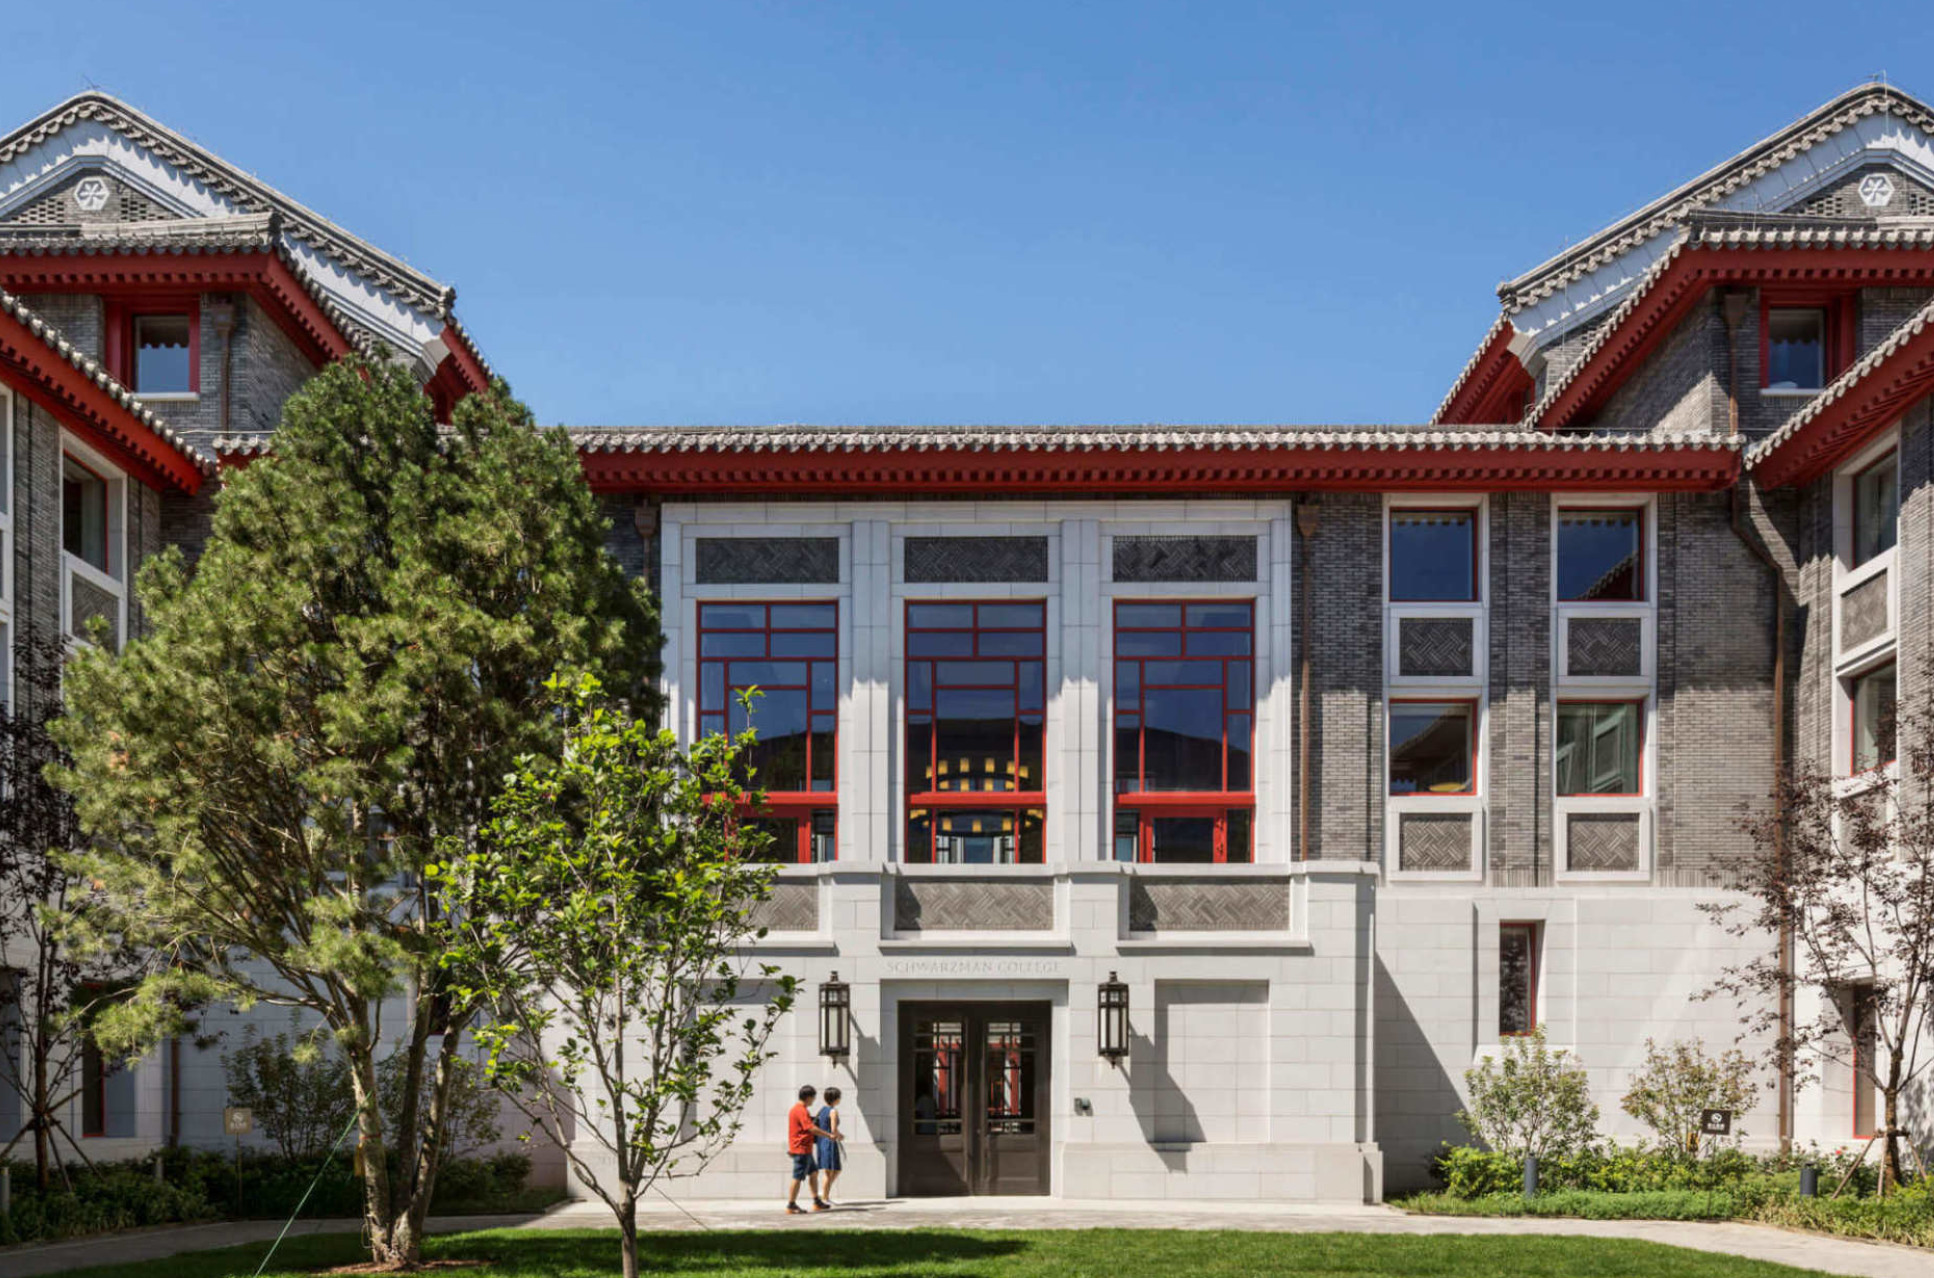 Schwarzman College based at Tsinghua University in Beijing